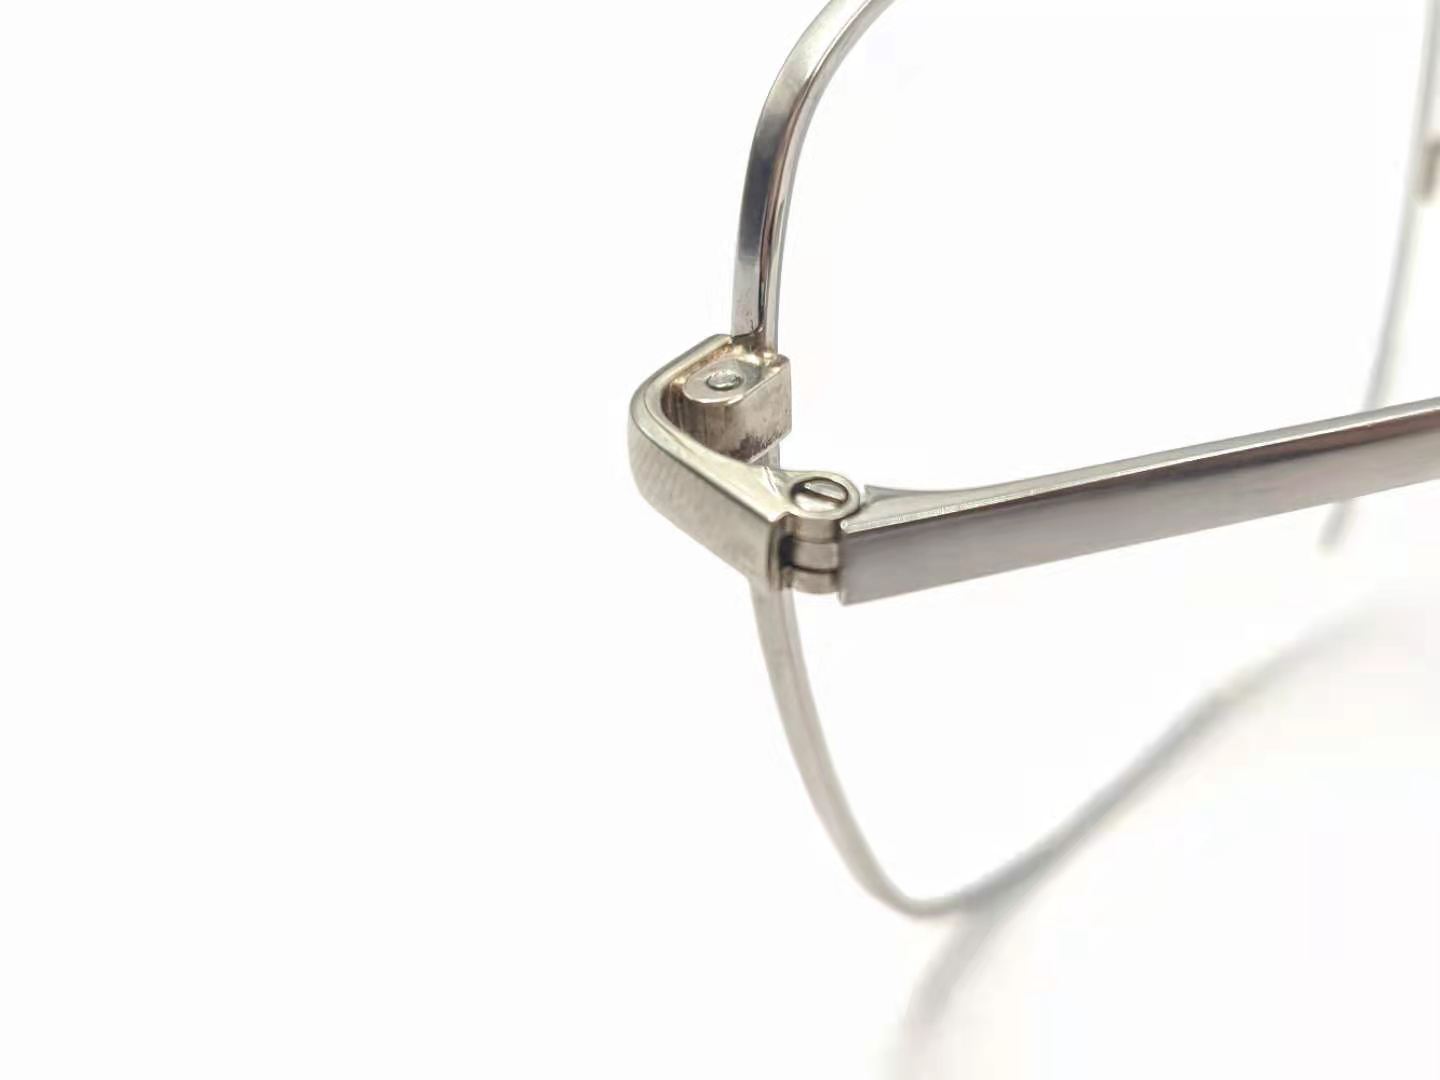 Square Titanium Eyeglass Frames Manufacturers Spectacle Factory Shop